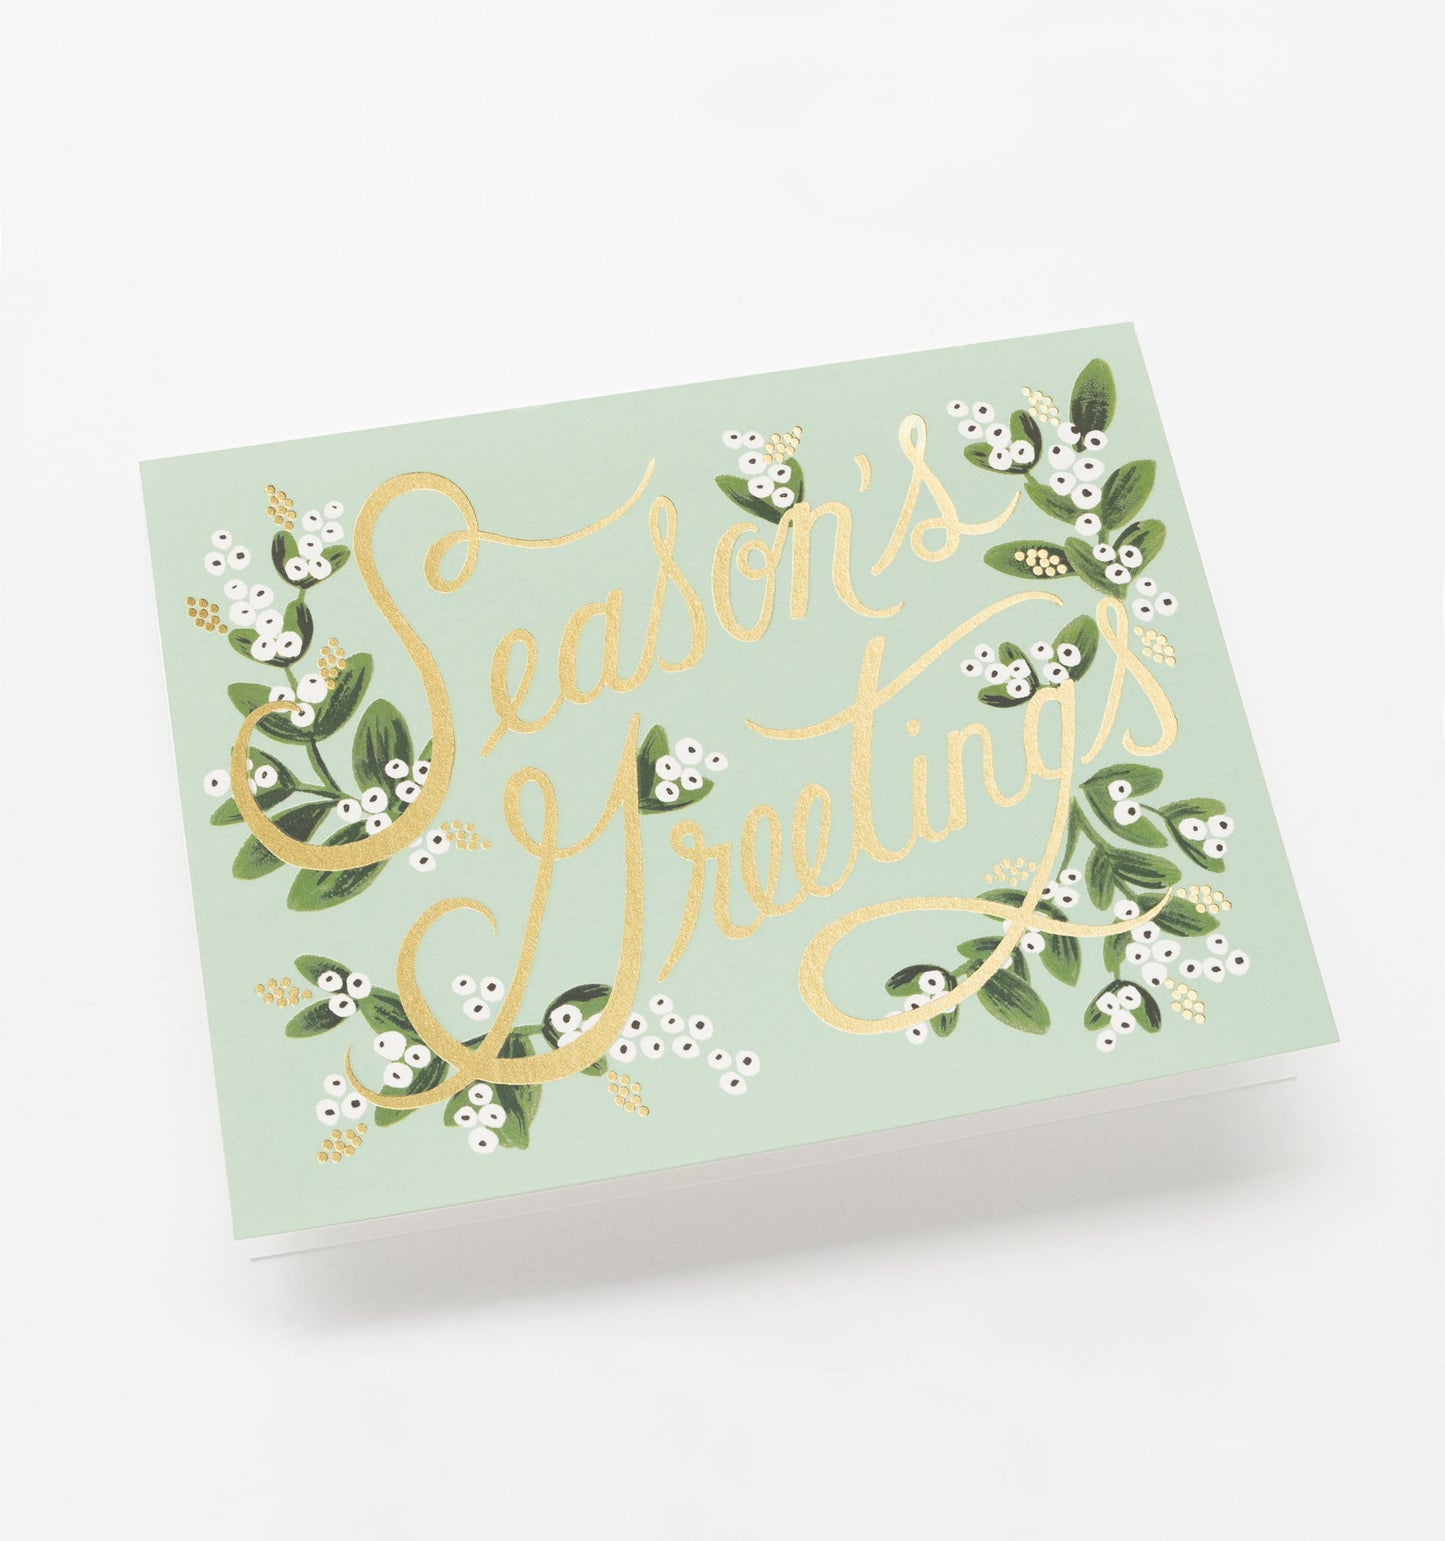 Boxed set of Mistletoe Season's Greetings Card